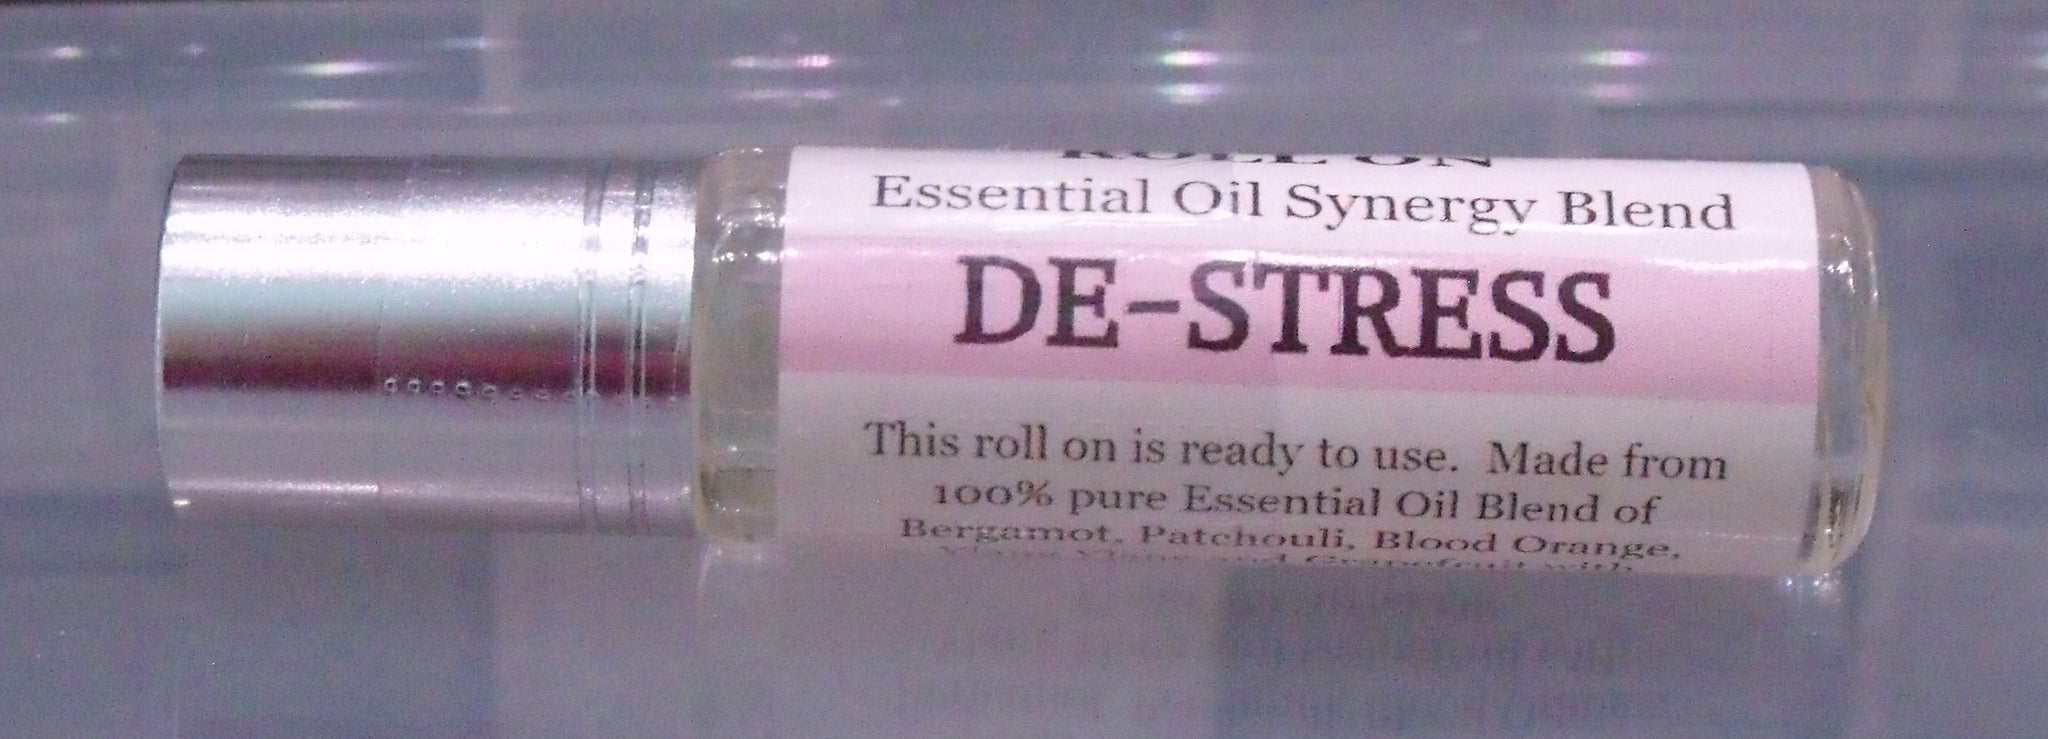 De-Stress Synergy Blend Roll On